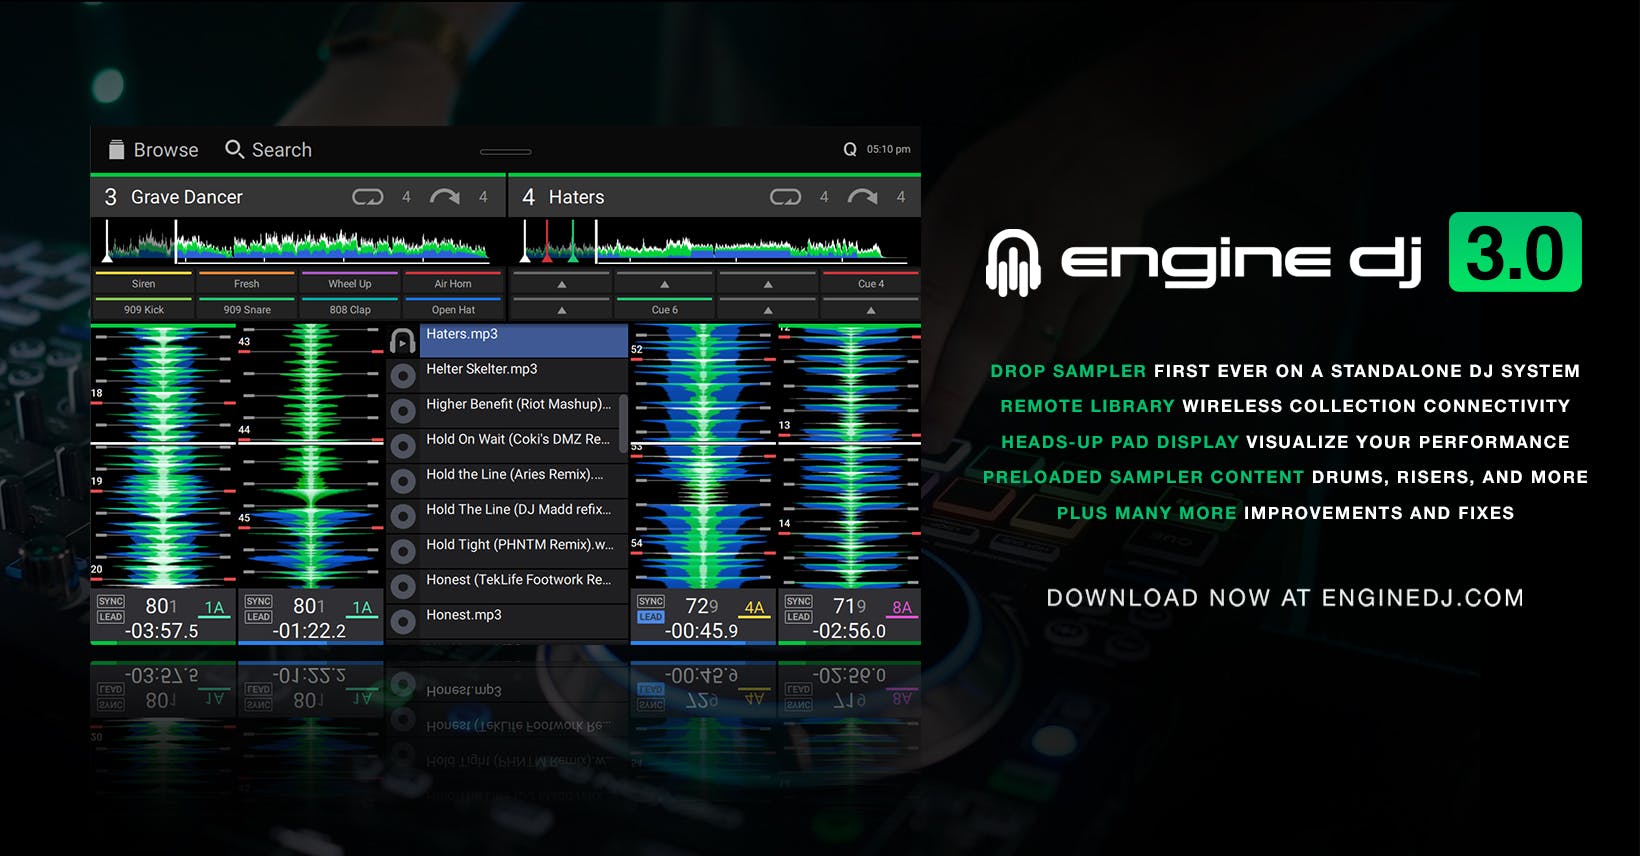 Engine DJ v3.0.0 social media banner